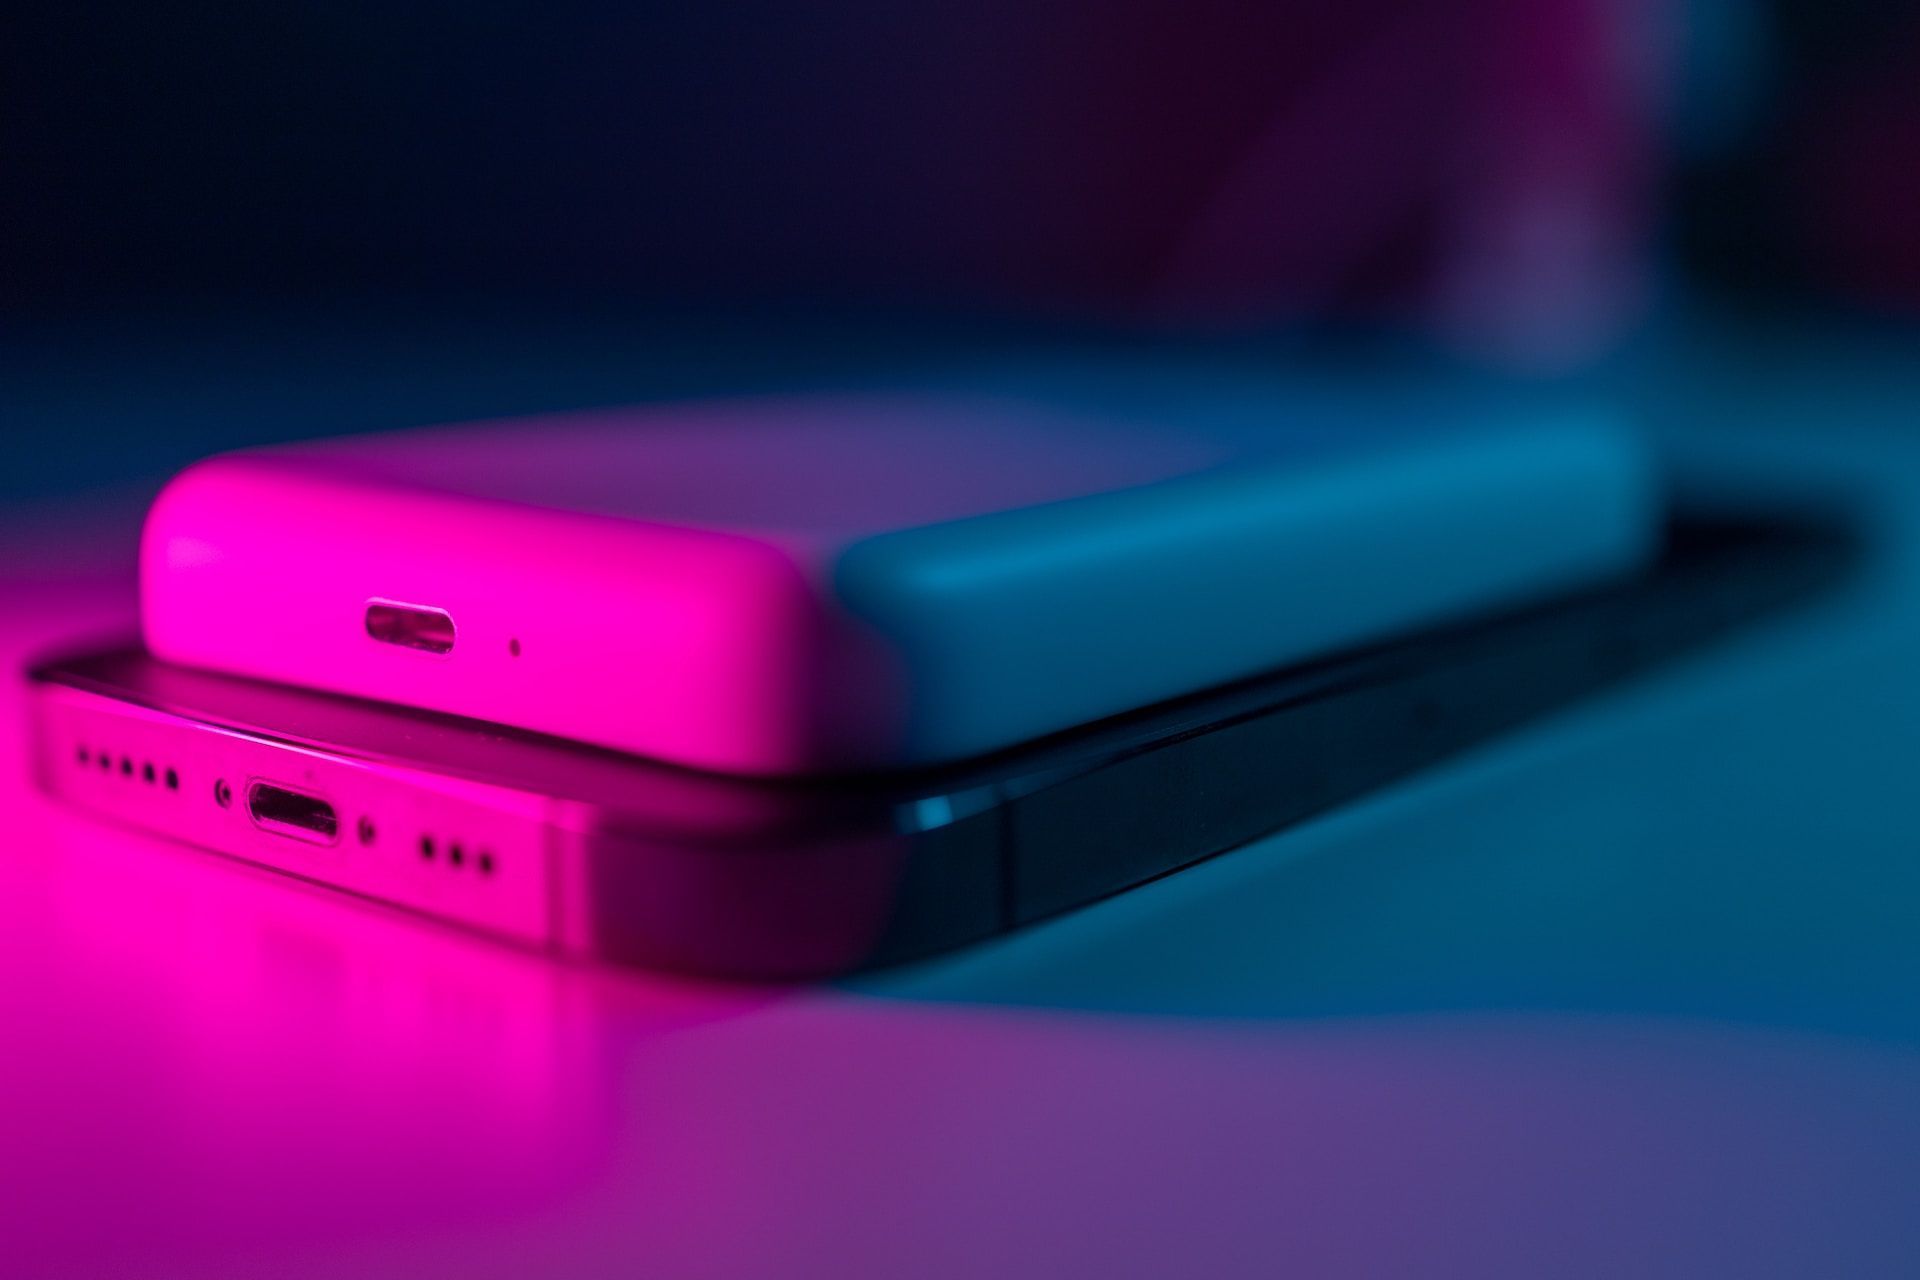 Apple iPhone battery lawsuit